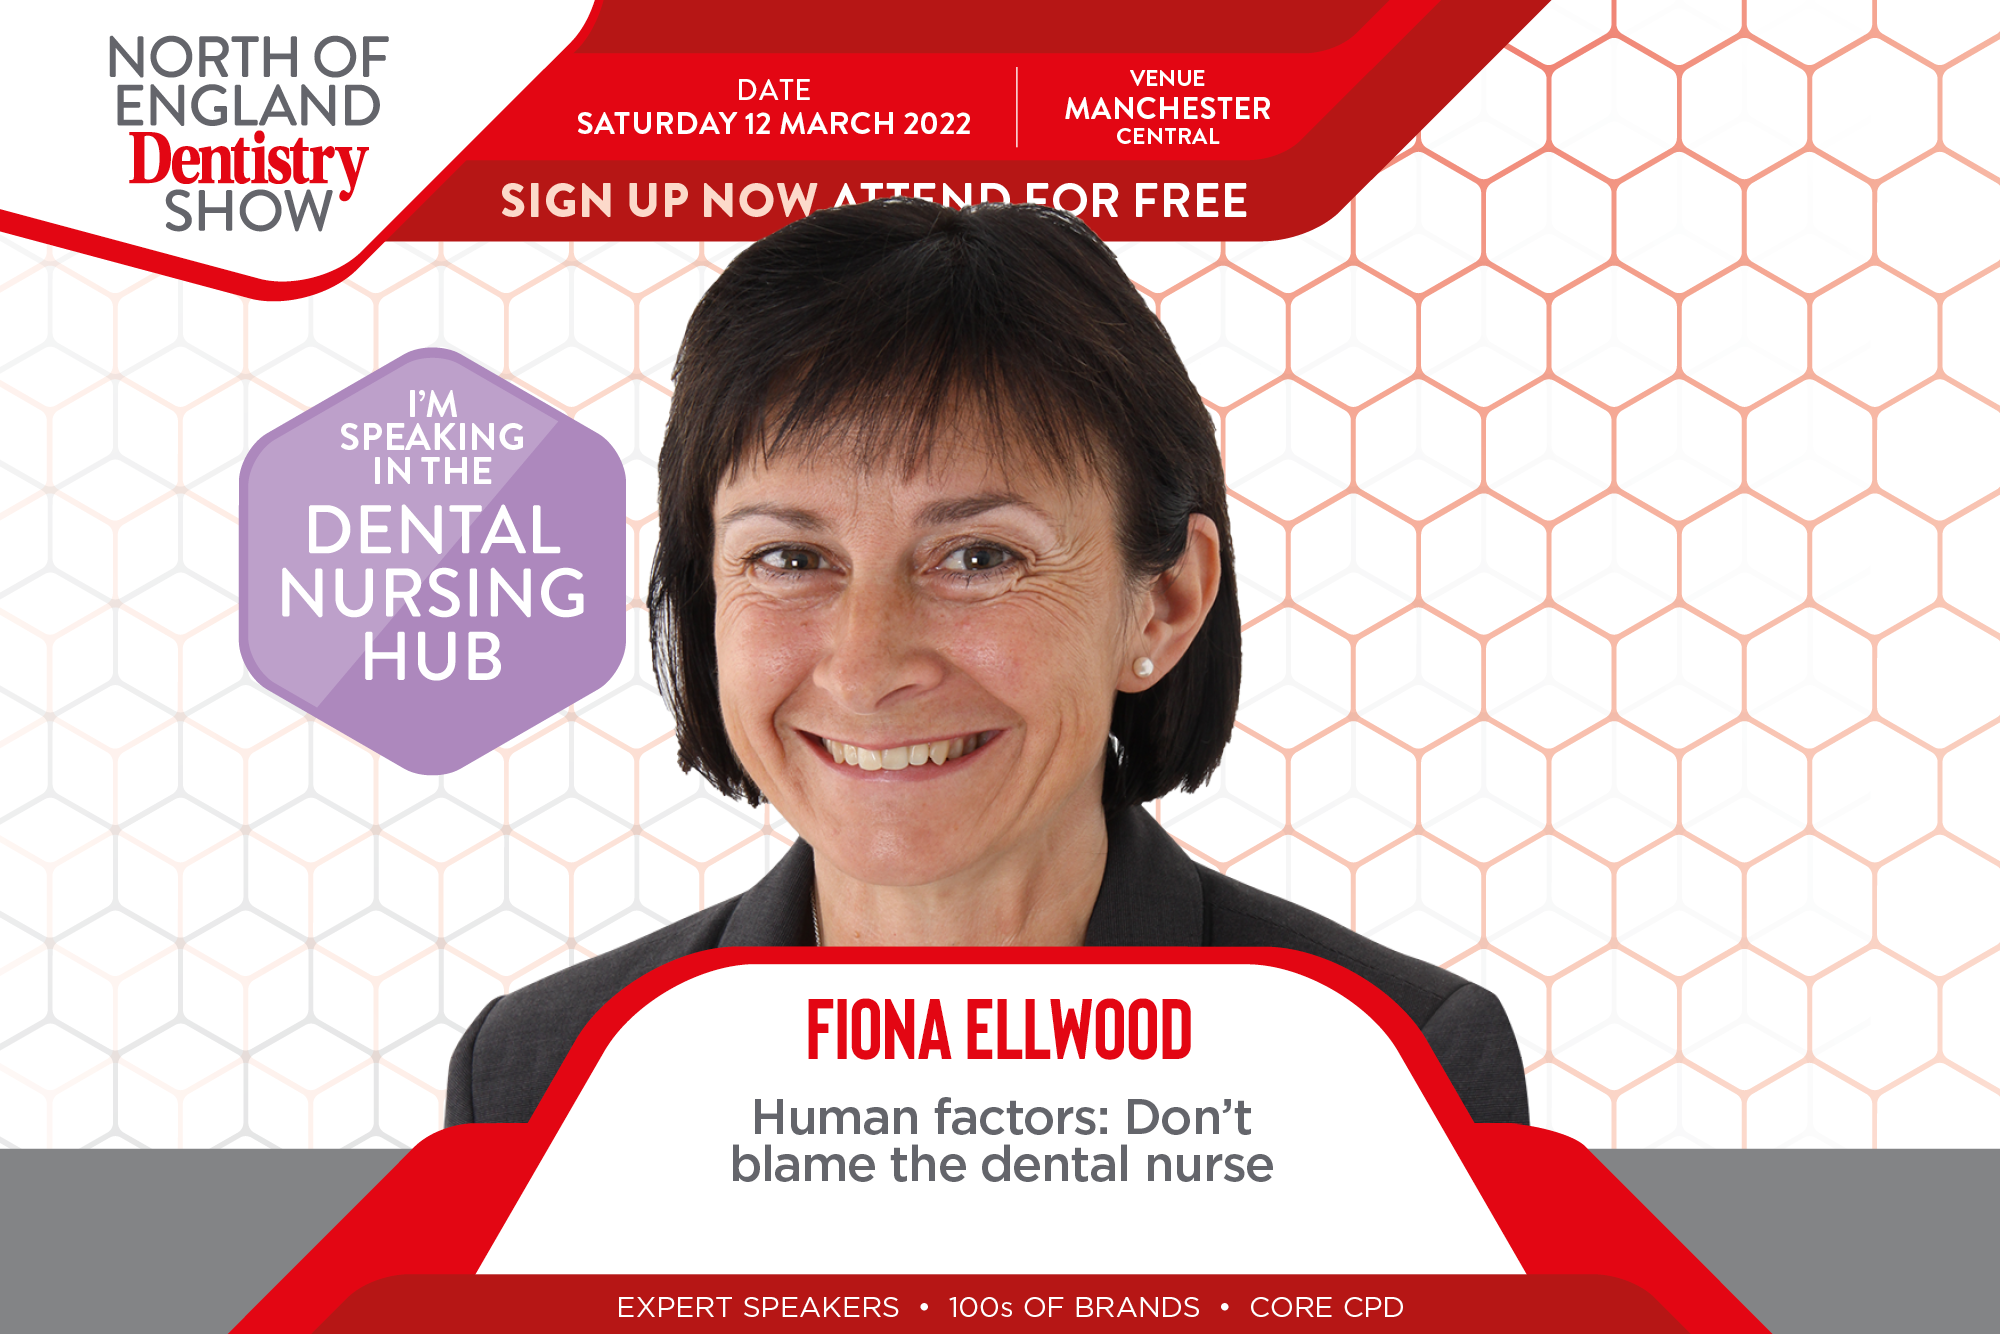 North of England Dentistry Show – Fiona Ellwood